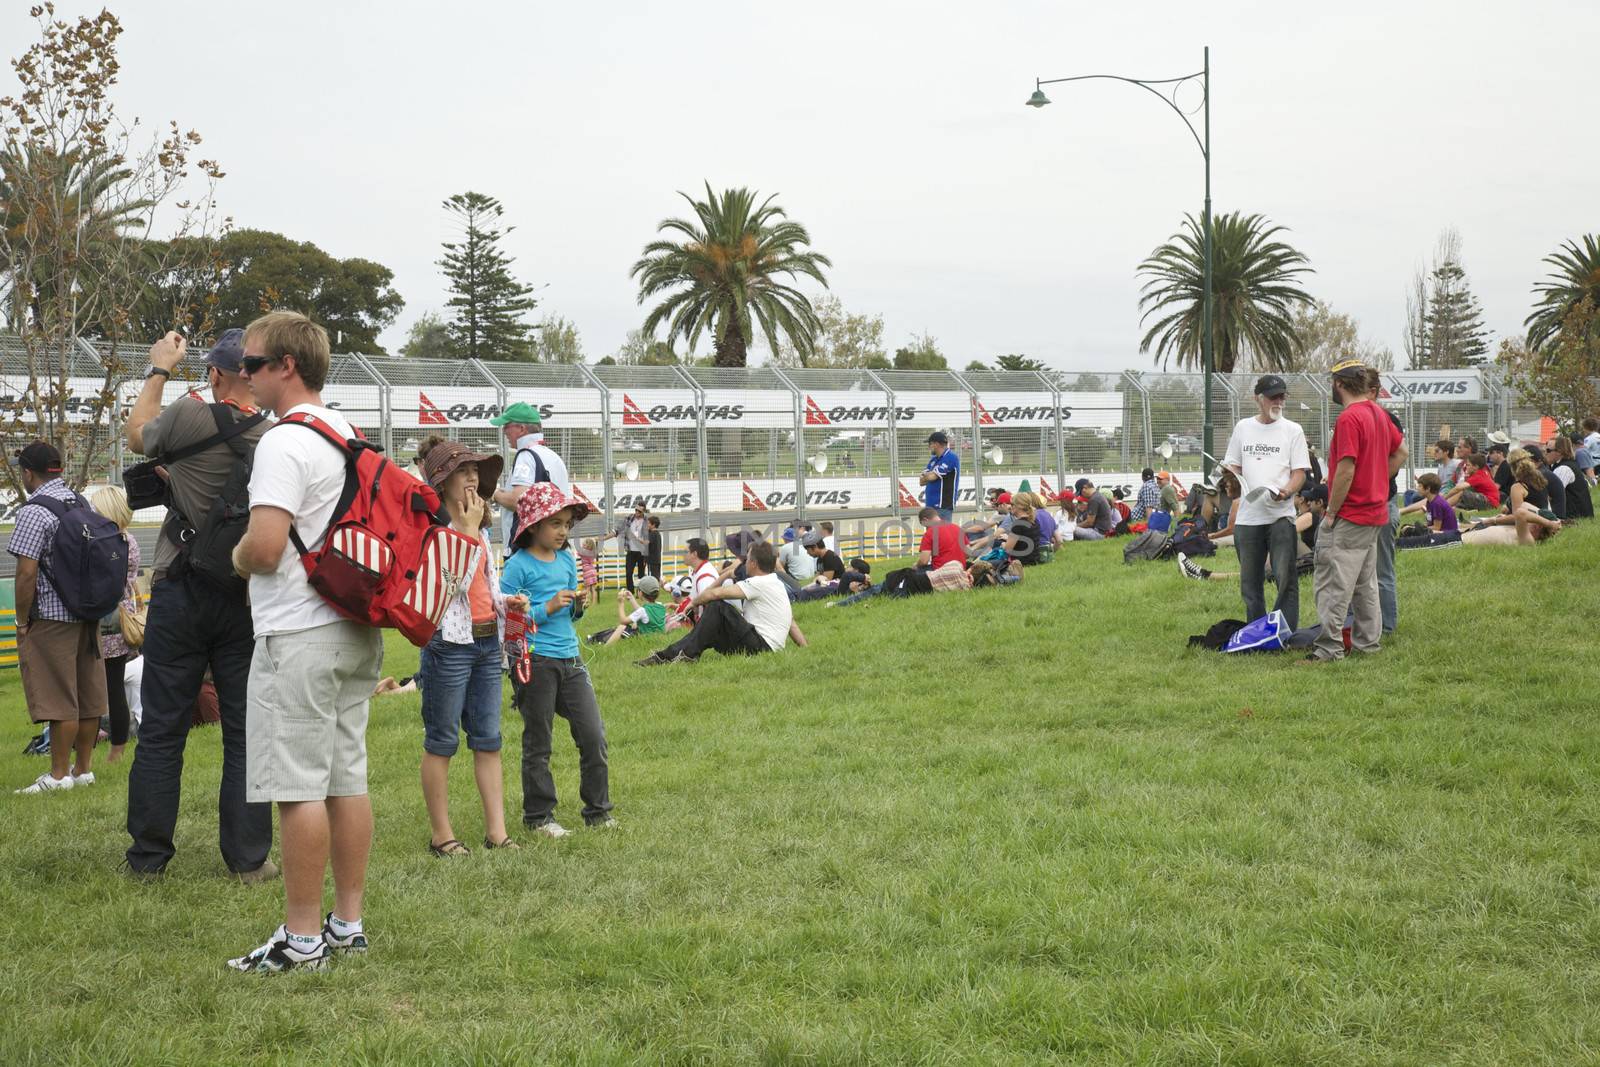 Melbourne 2010 Formula One, Australia by instinia